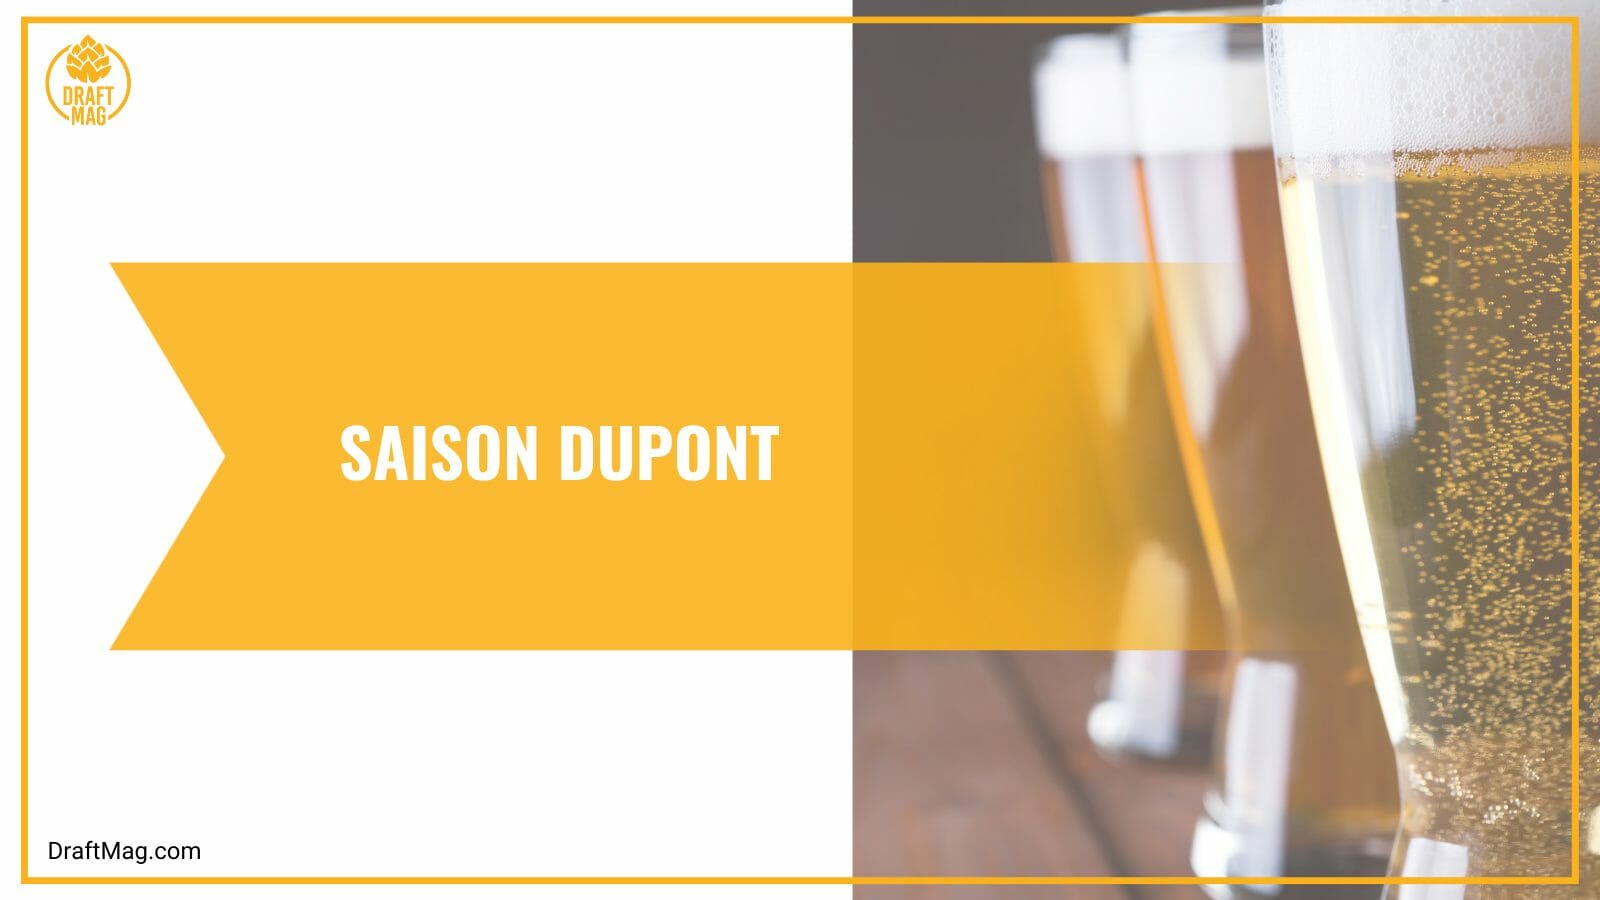 Saison dupont with fruity aromas